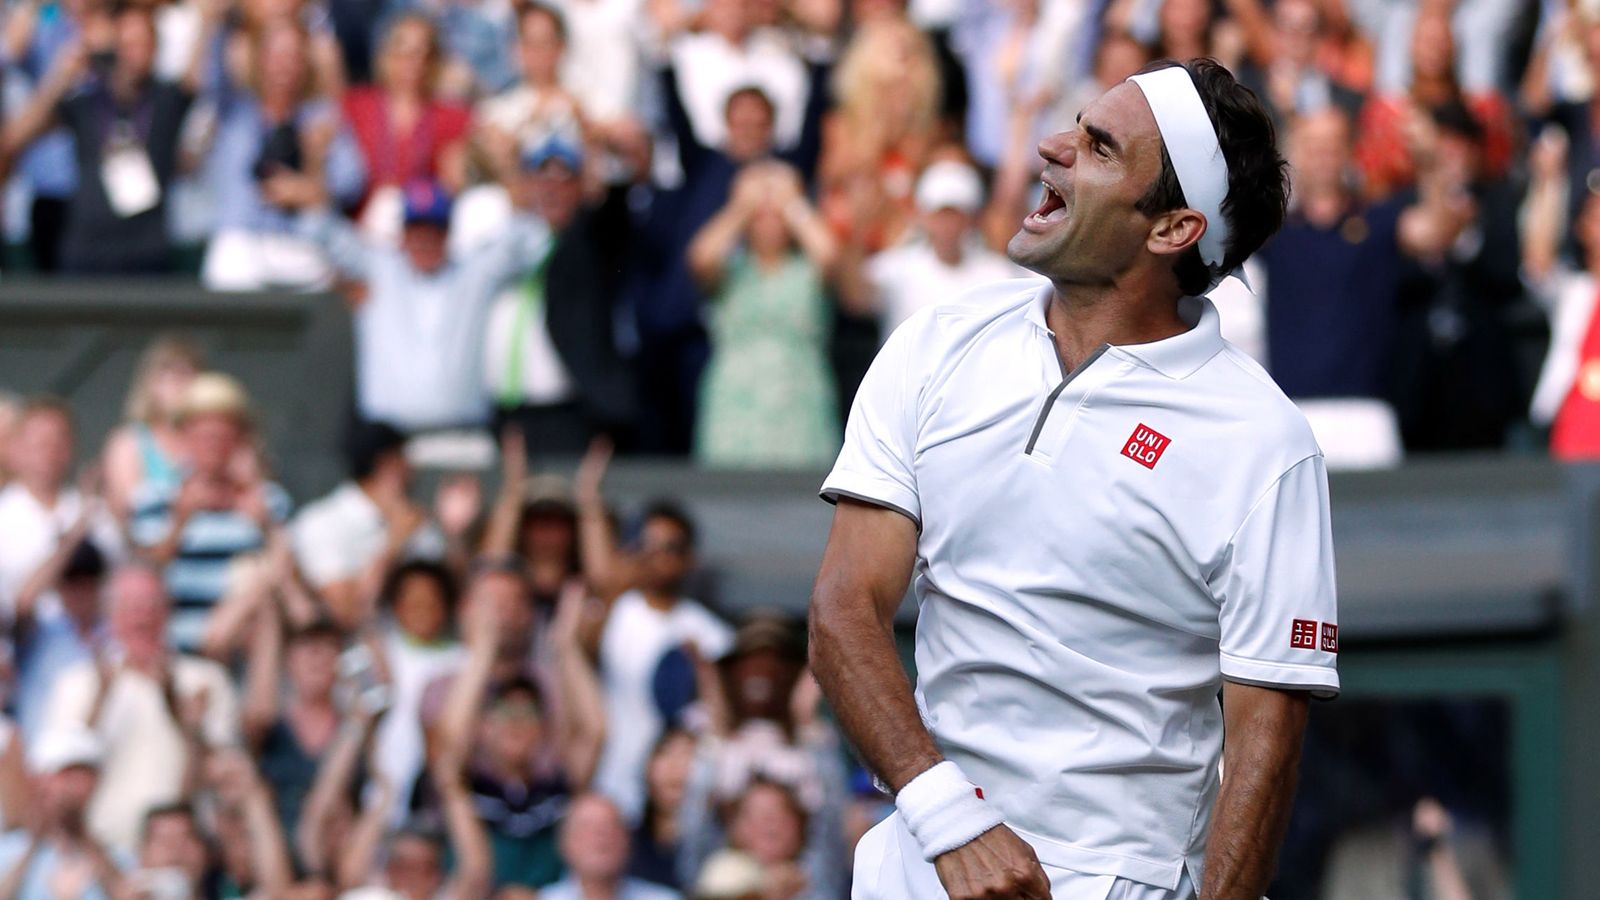 Foto: Roger Federer celebra su pase a la final de Wimbledon tras derrotar a Rafa Nadal. (Reuters)